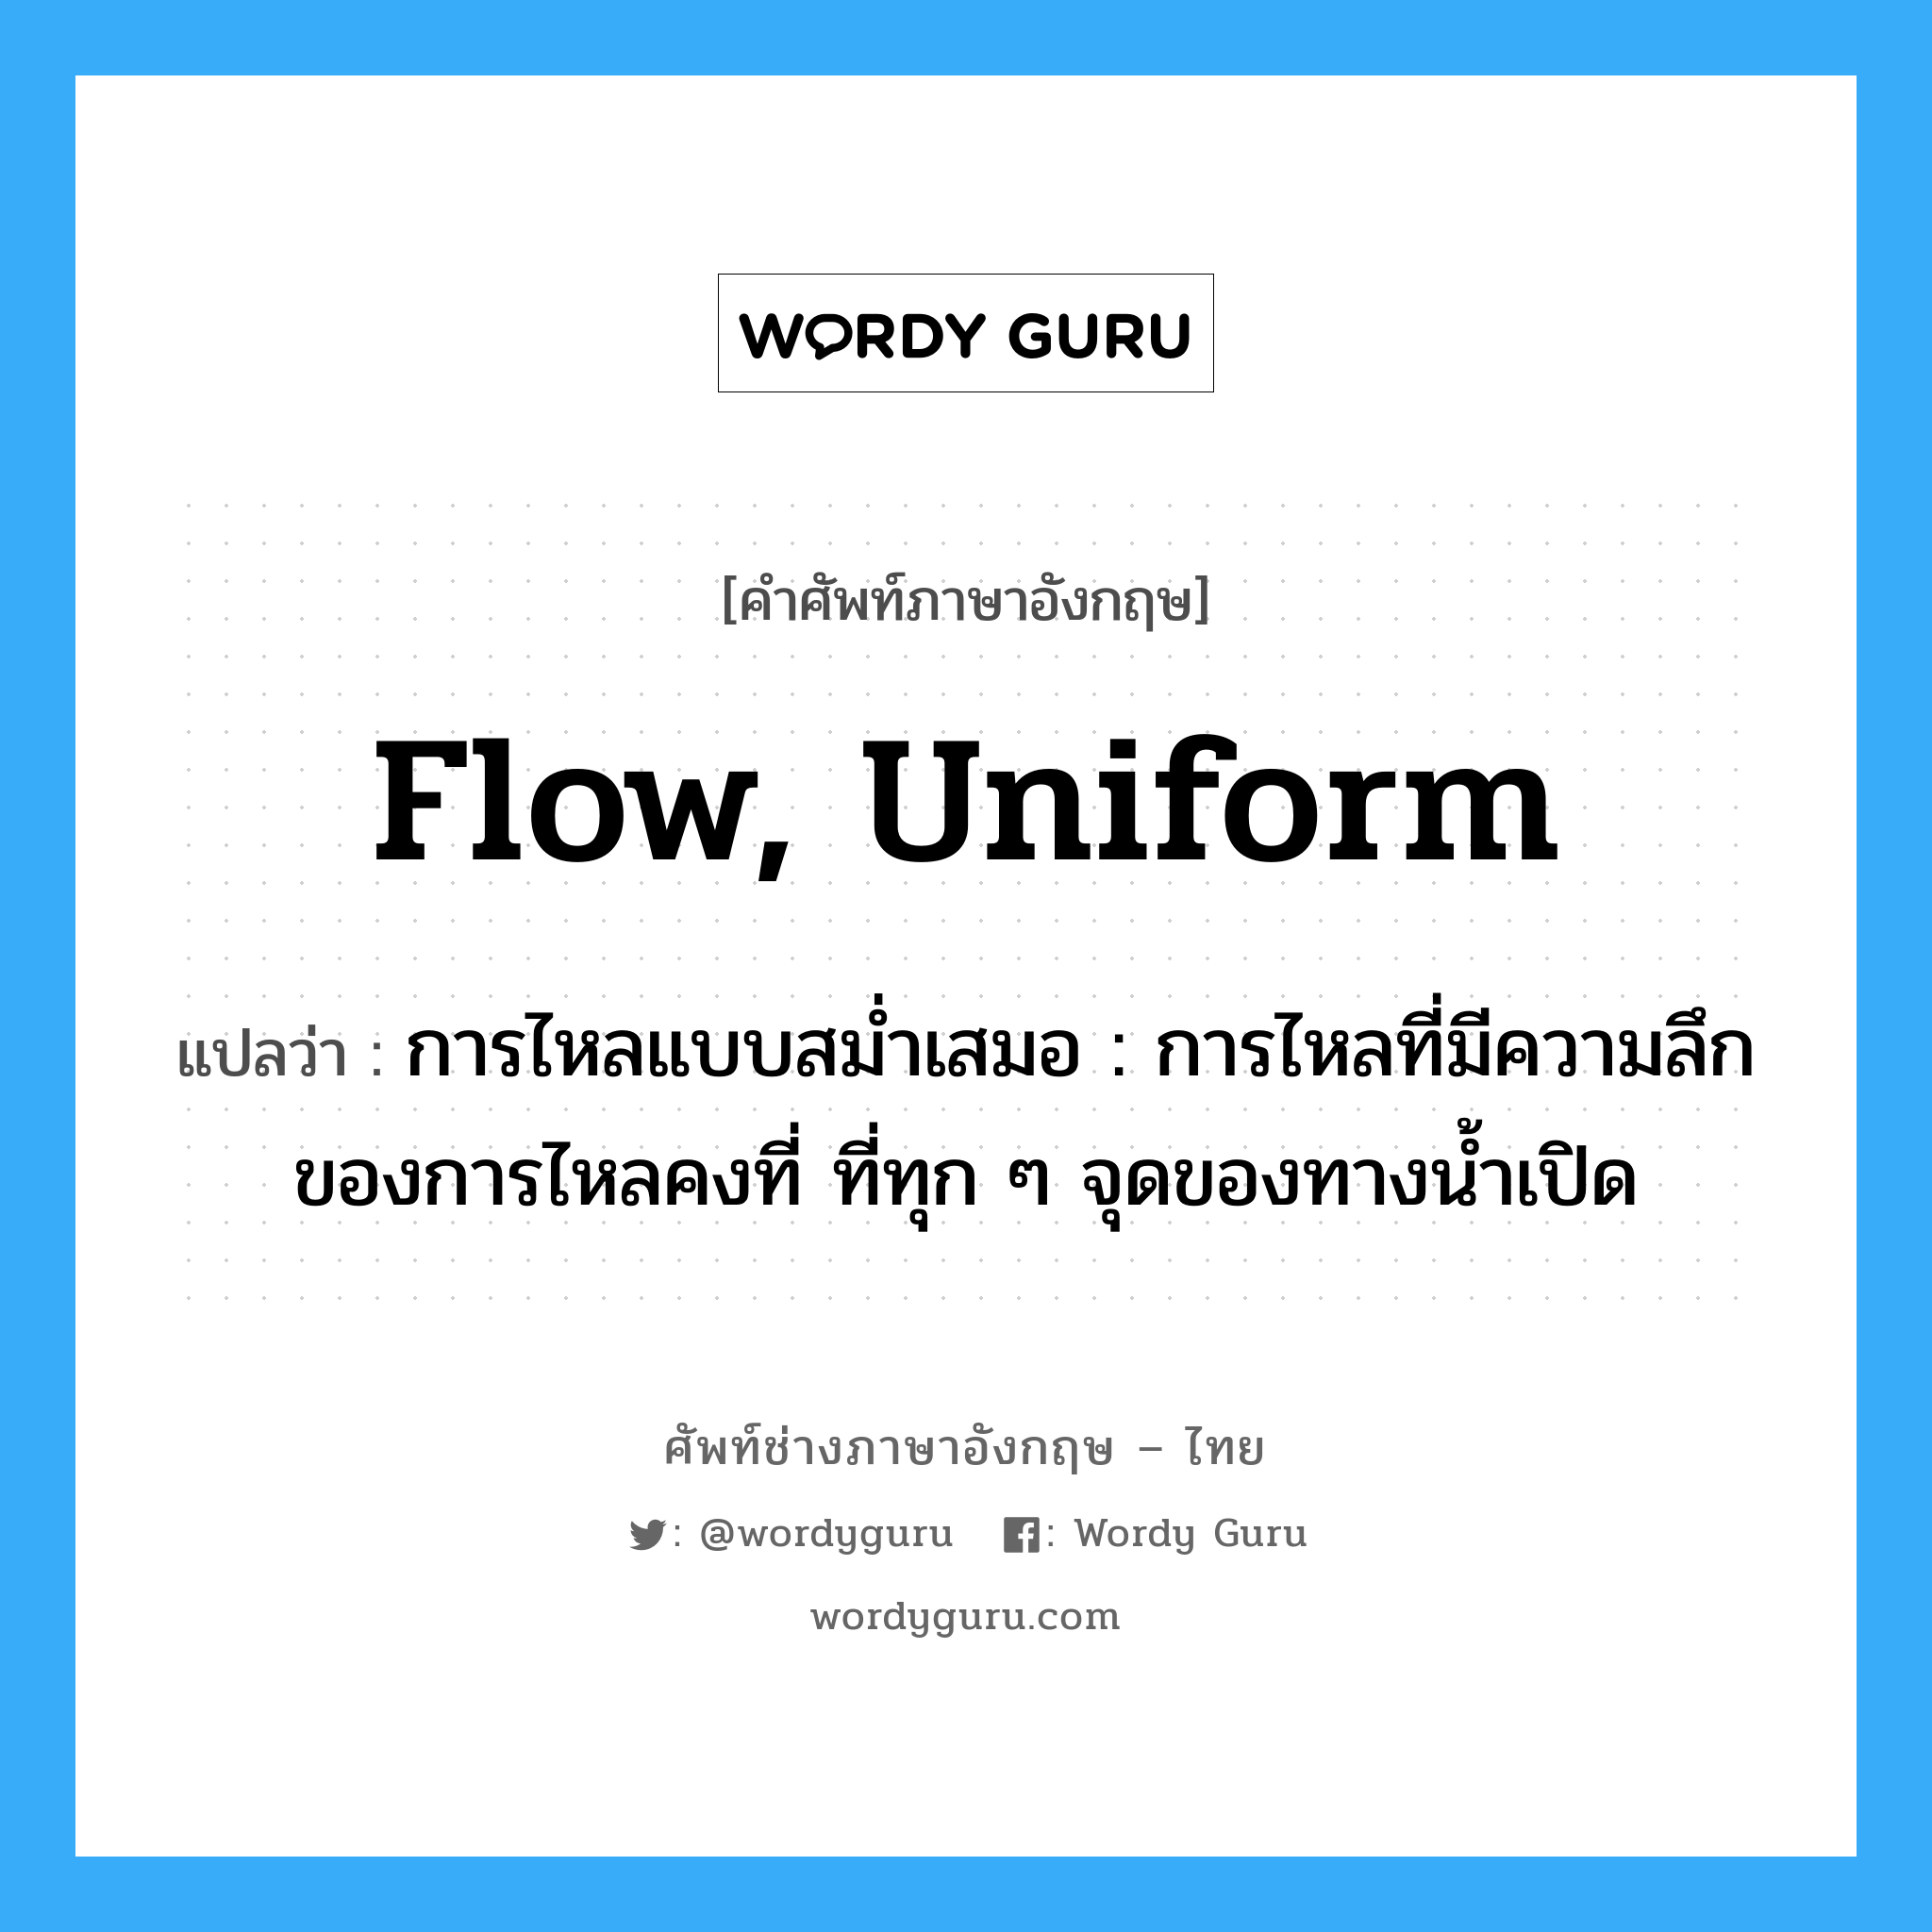 flow, uniform แปลว่า?, คำศัพท์ช่างภาษาอังกฤษ - ไทย flow, uniform คำศัพท์ภาษาอังกฤษ flow, uniform แปลว่า การไหลแบบสม่ำเสมอ : การไหลที่มีความลึกของการไหลคงที่ ที่ทุก ๆ จุดของทางน้ำเปิด